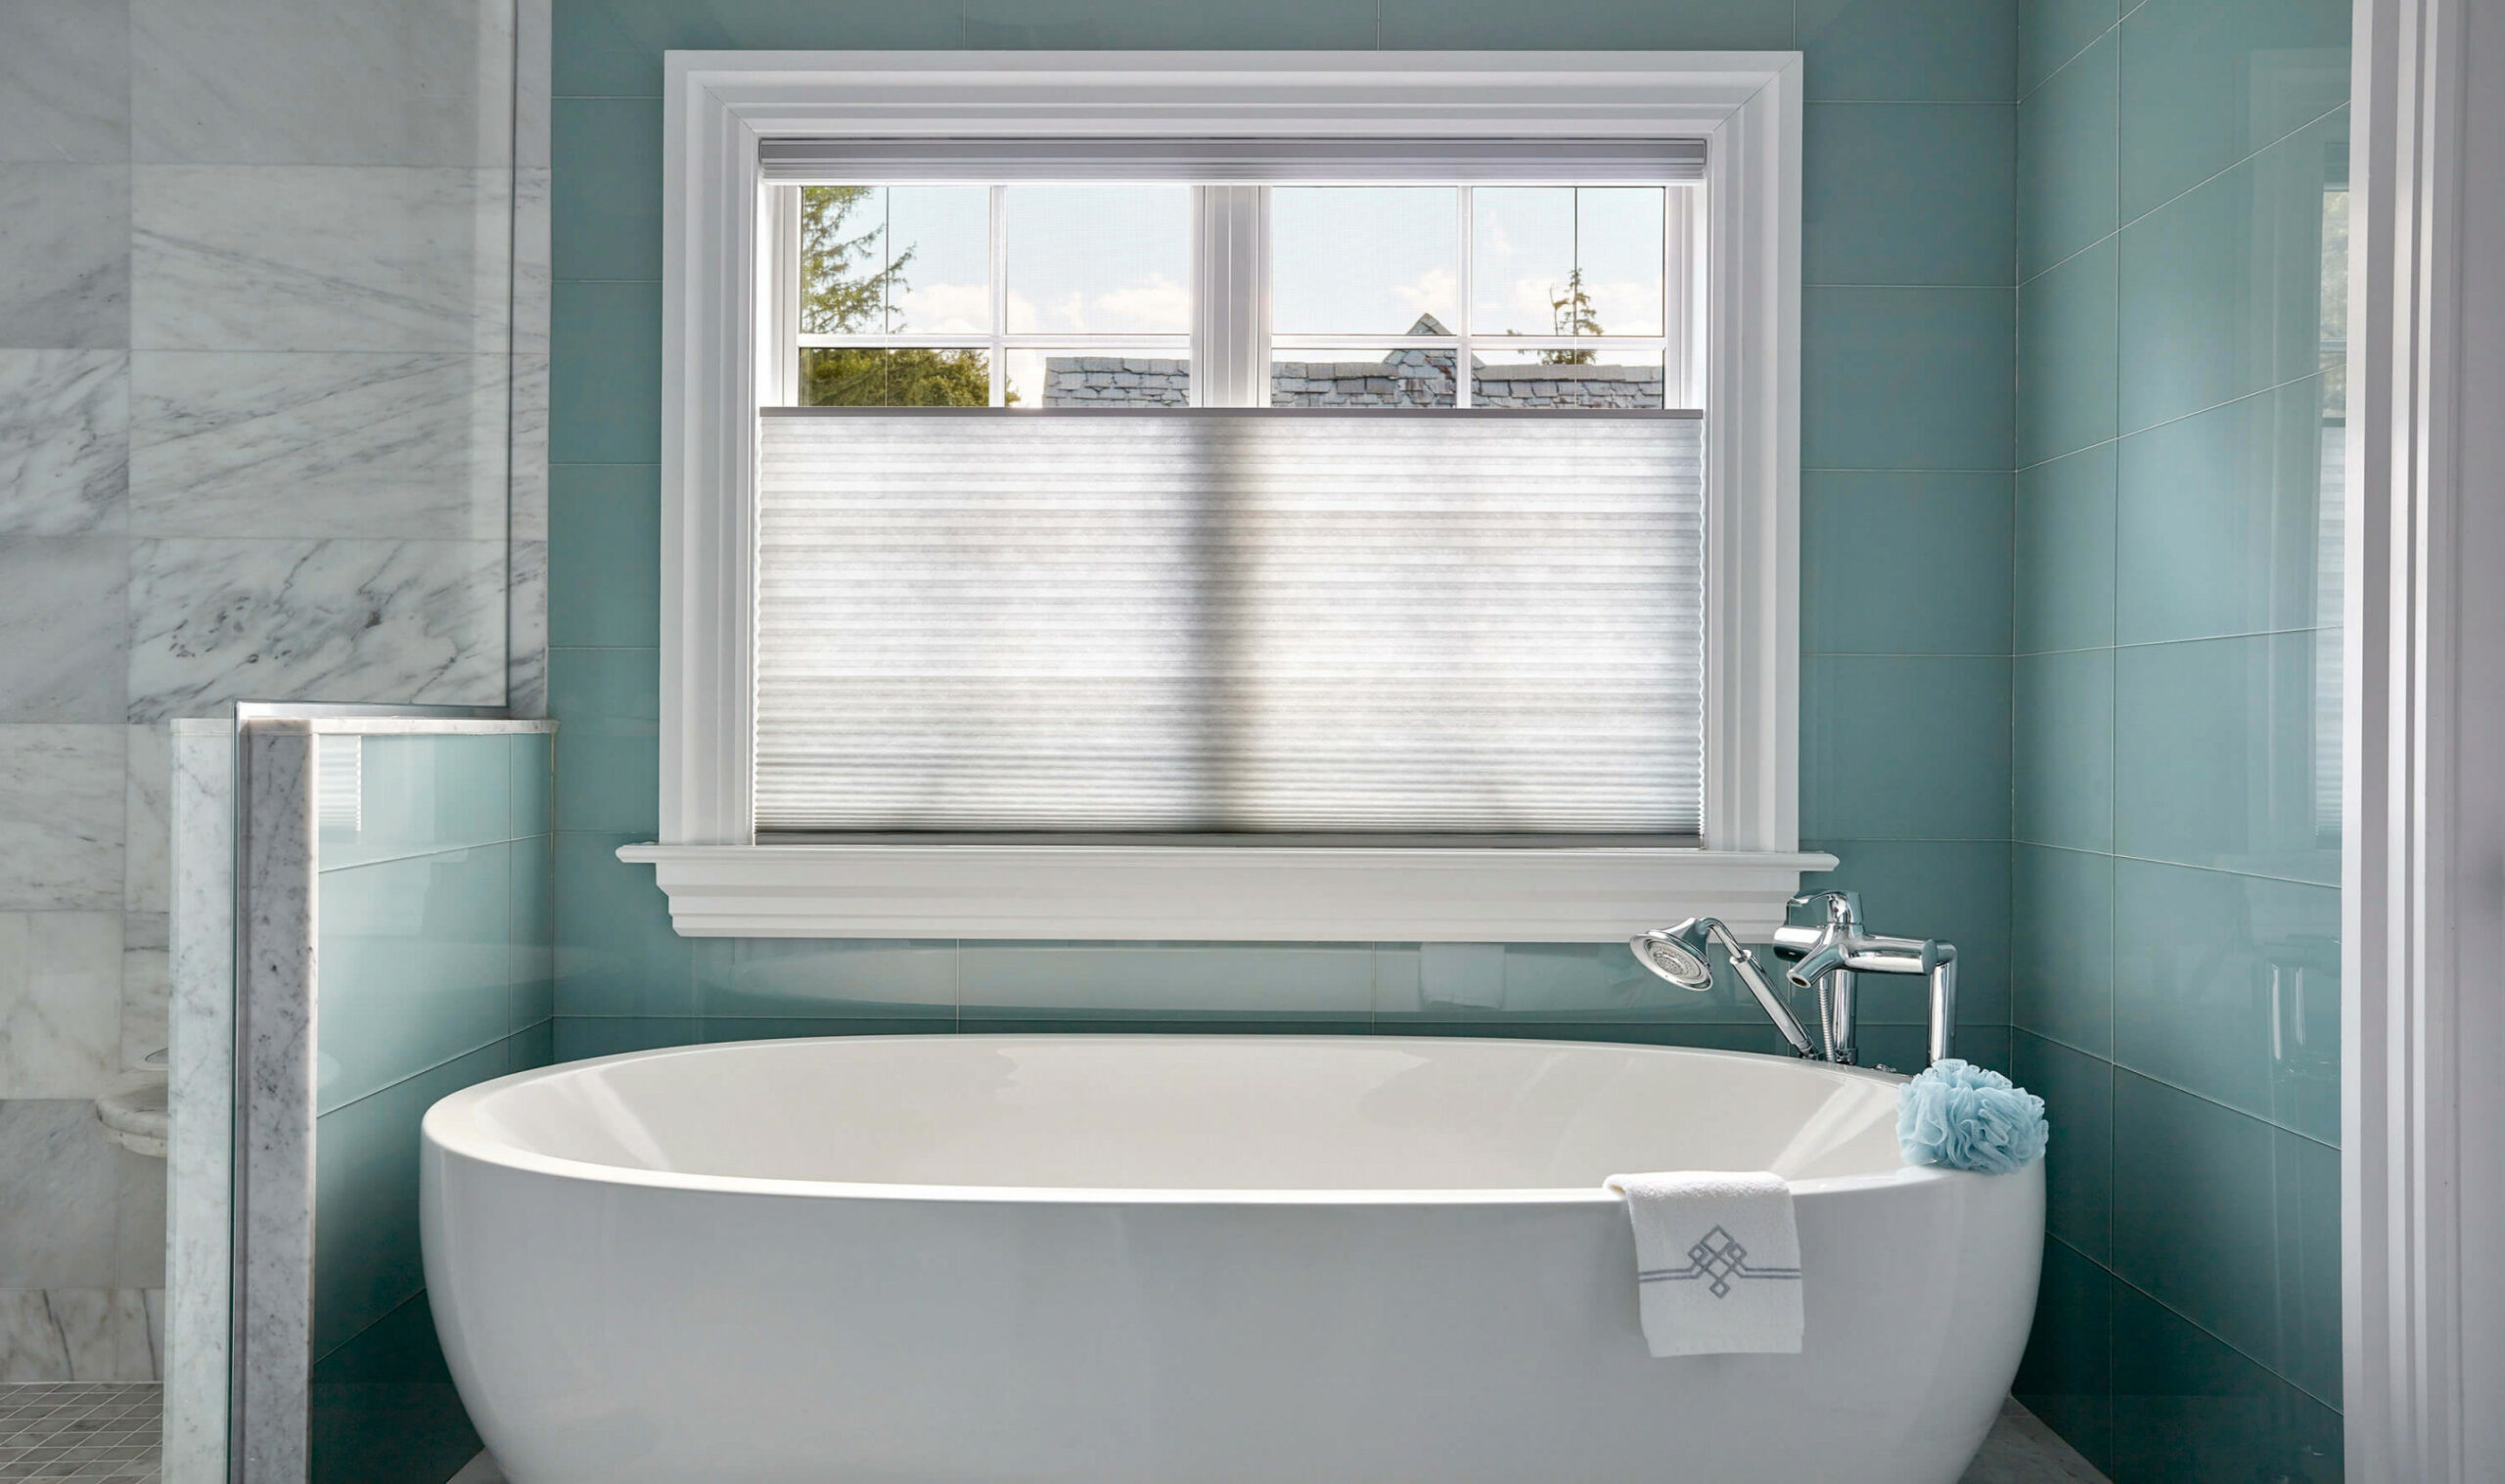 Bathroom Blinds, Shades & Window Treatments - Blinds To Go